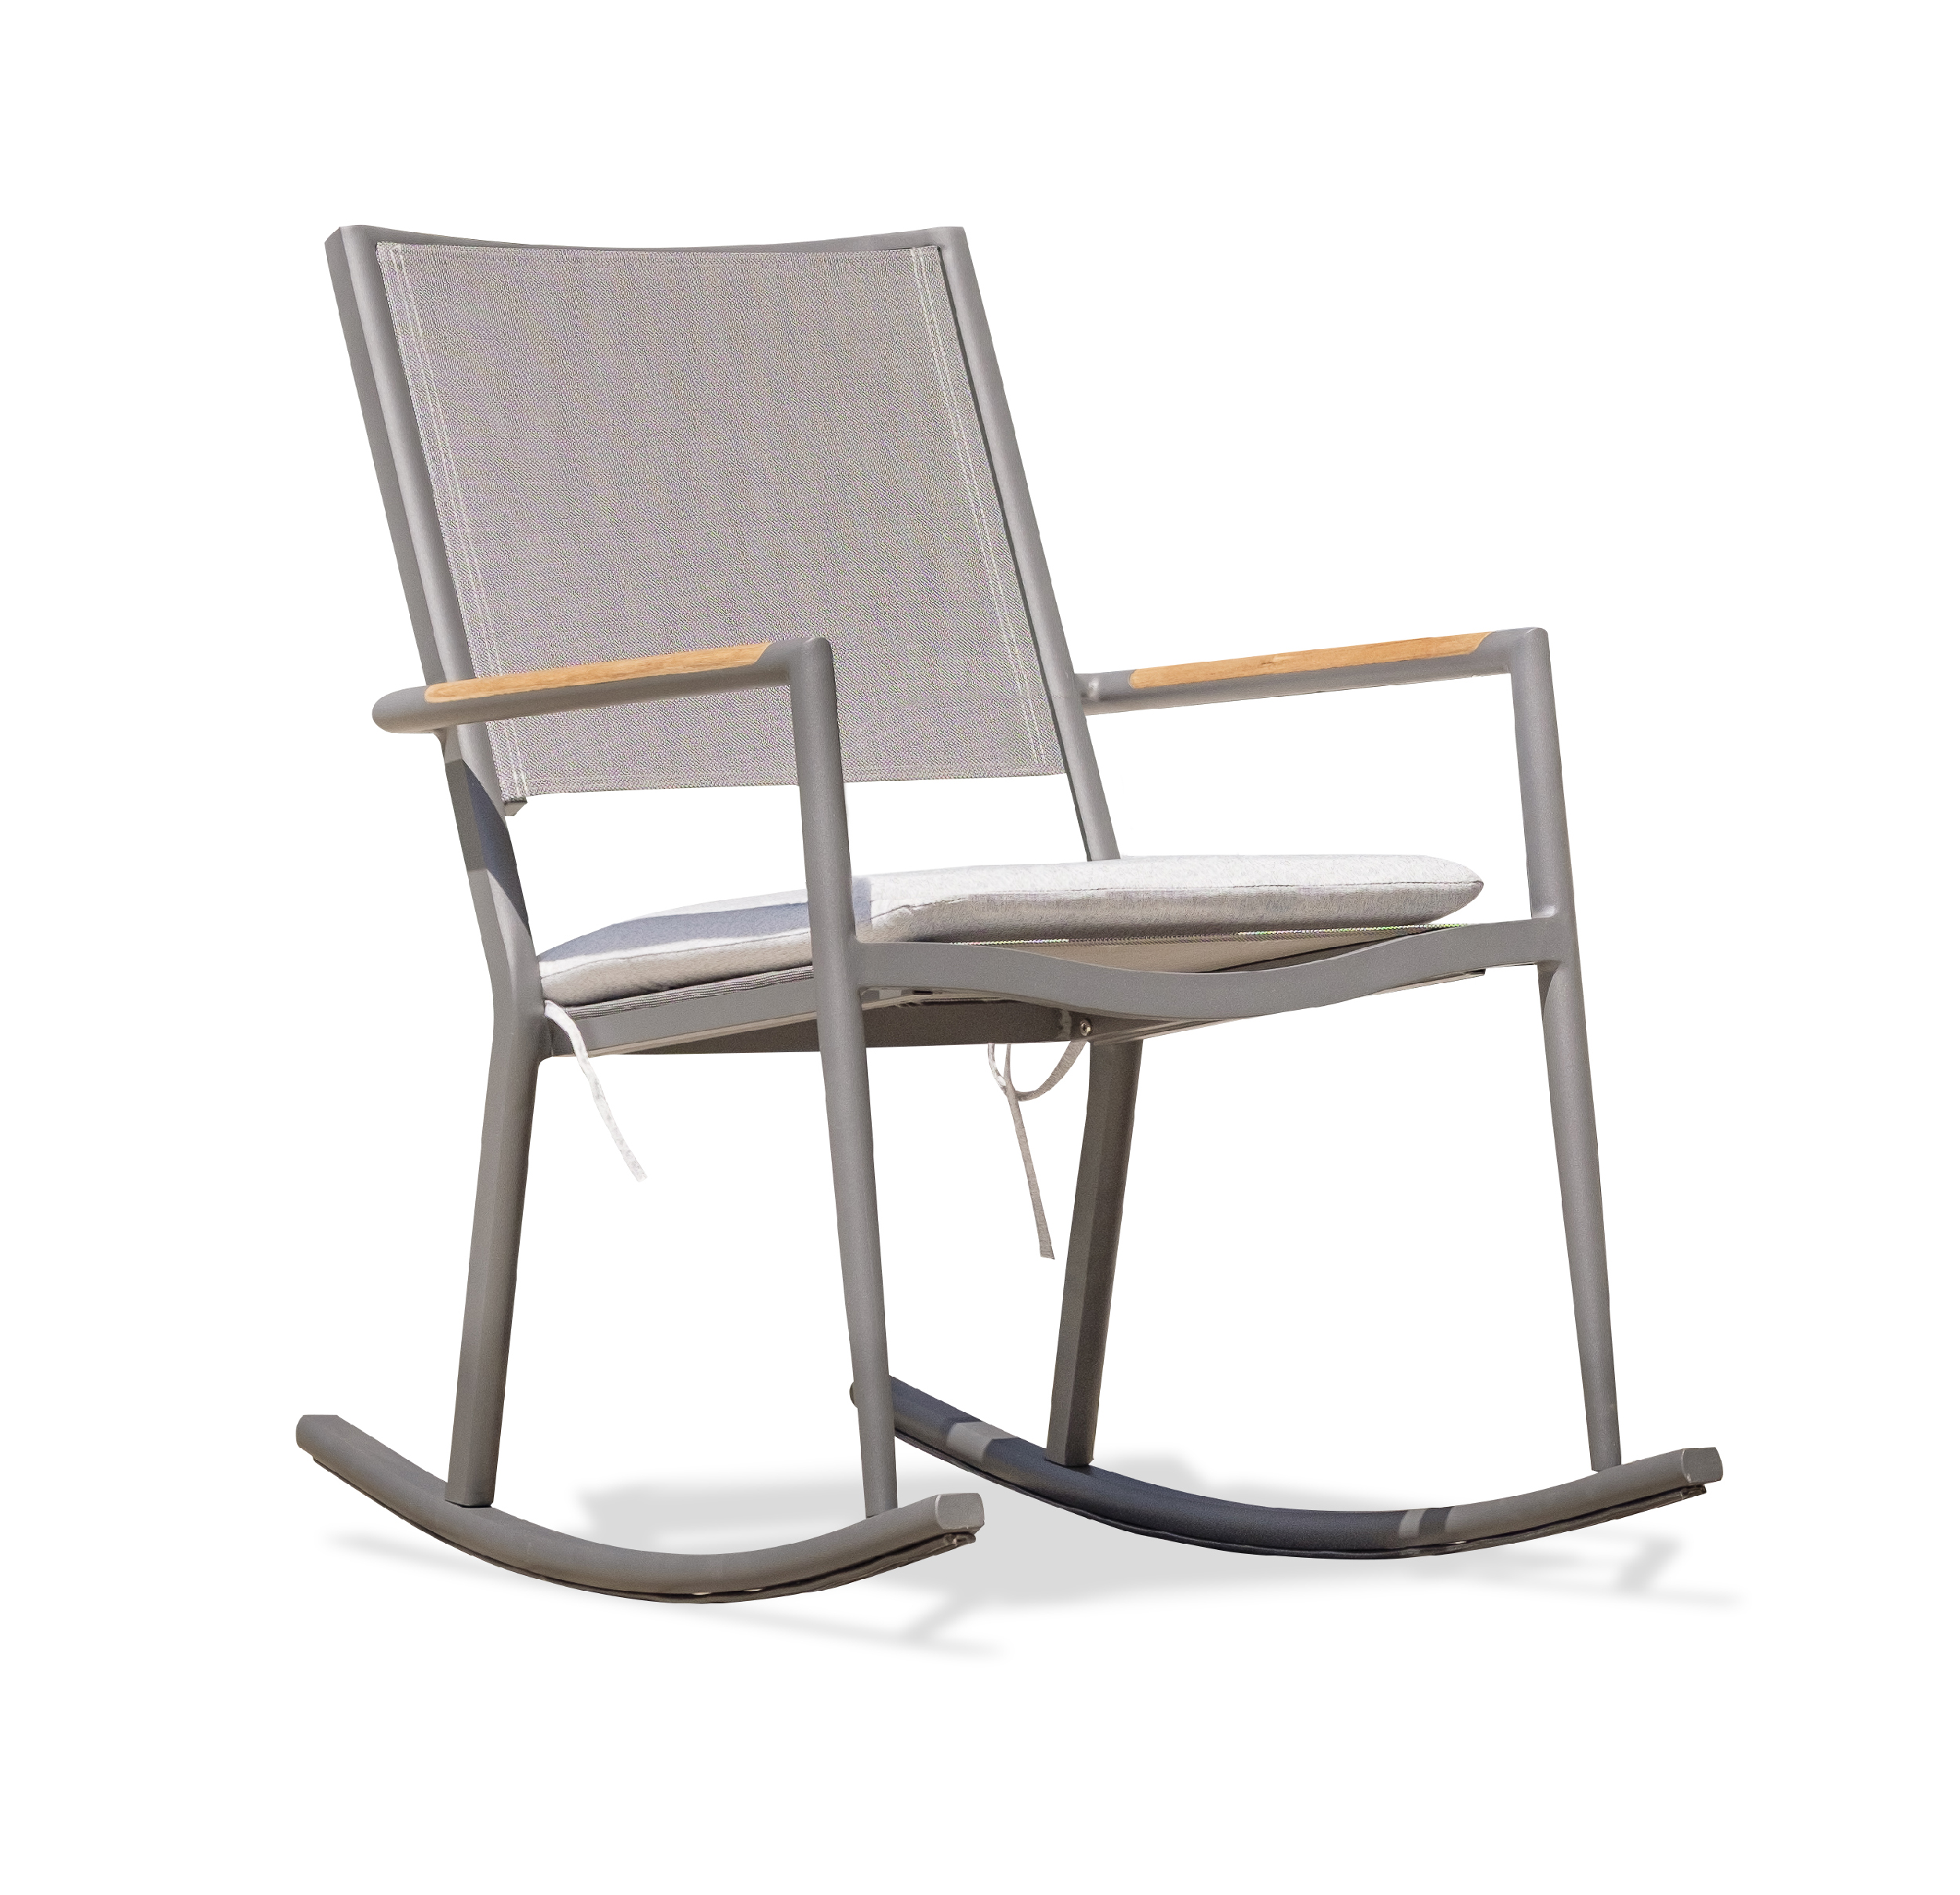 fauteuil à bascule de jardin en aluminium toile plastifiée anthracite